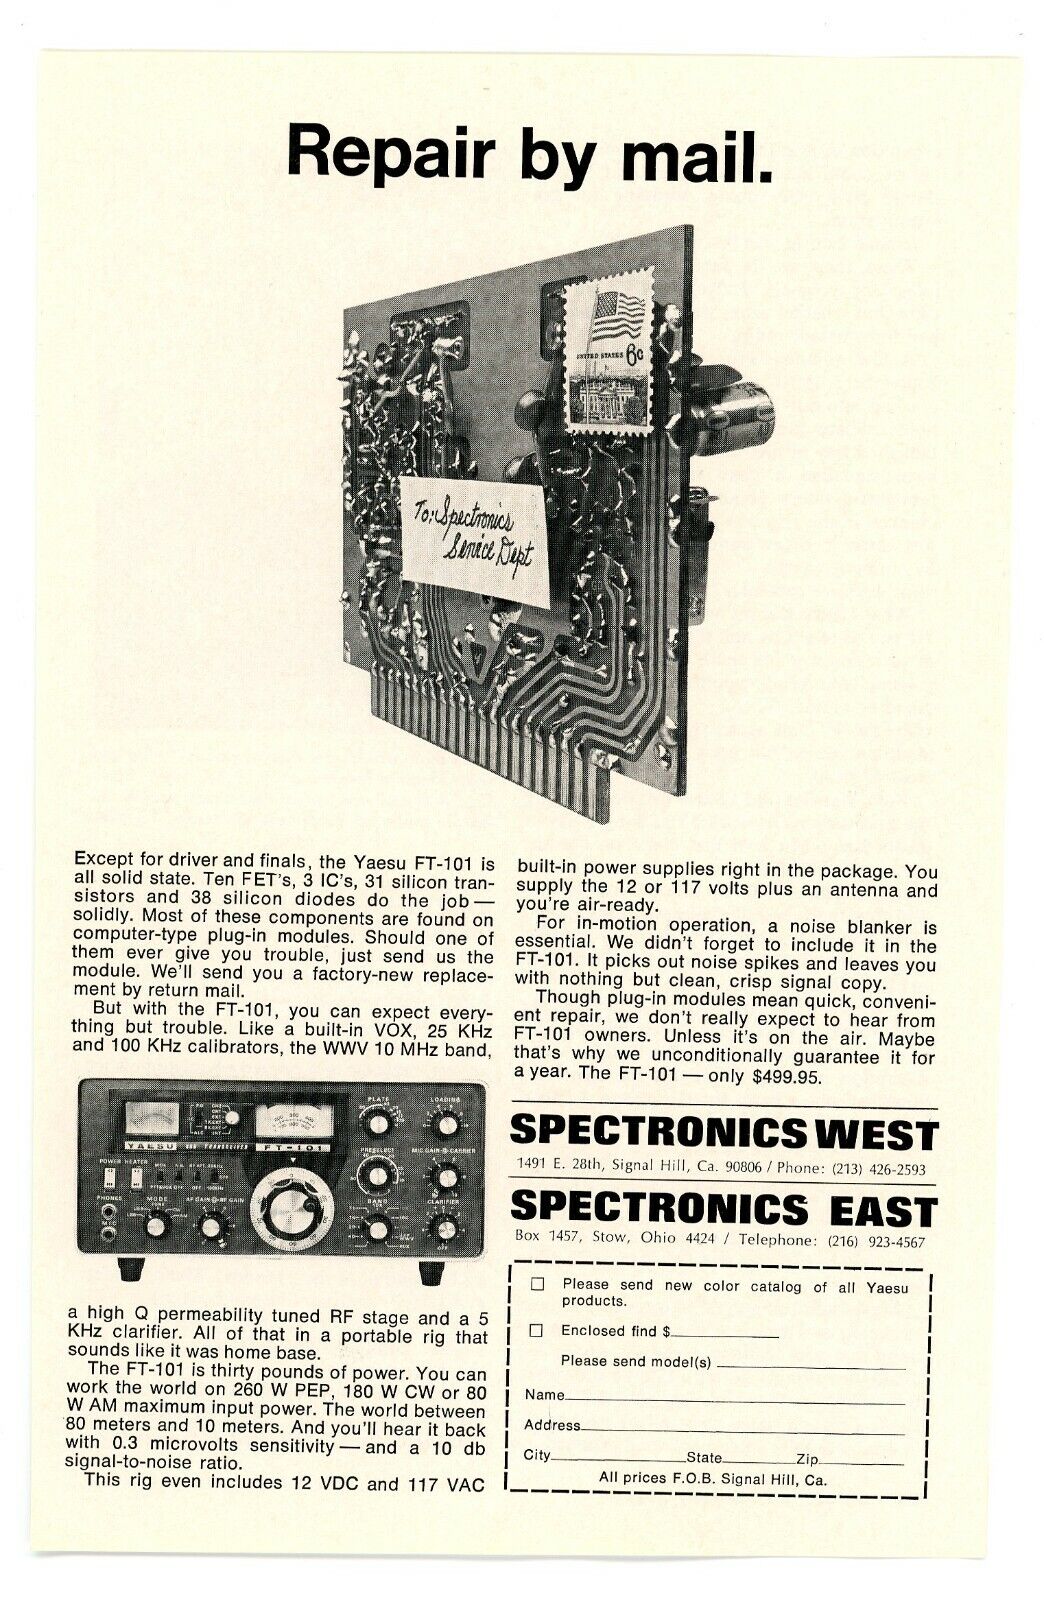 CQ Ham Radio Magazine Print Ad YAESU FT-101 Transceiver (1/71)